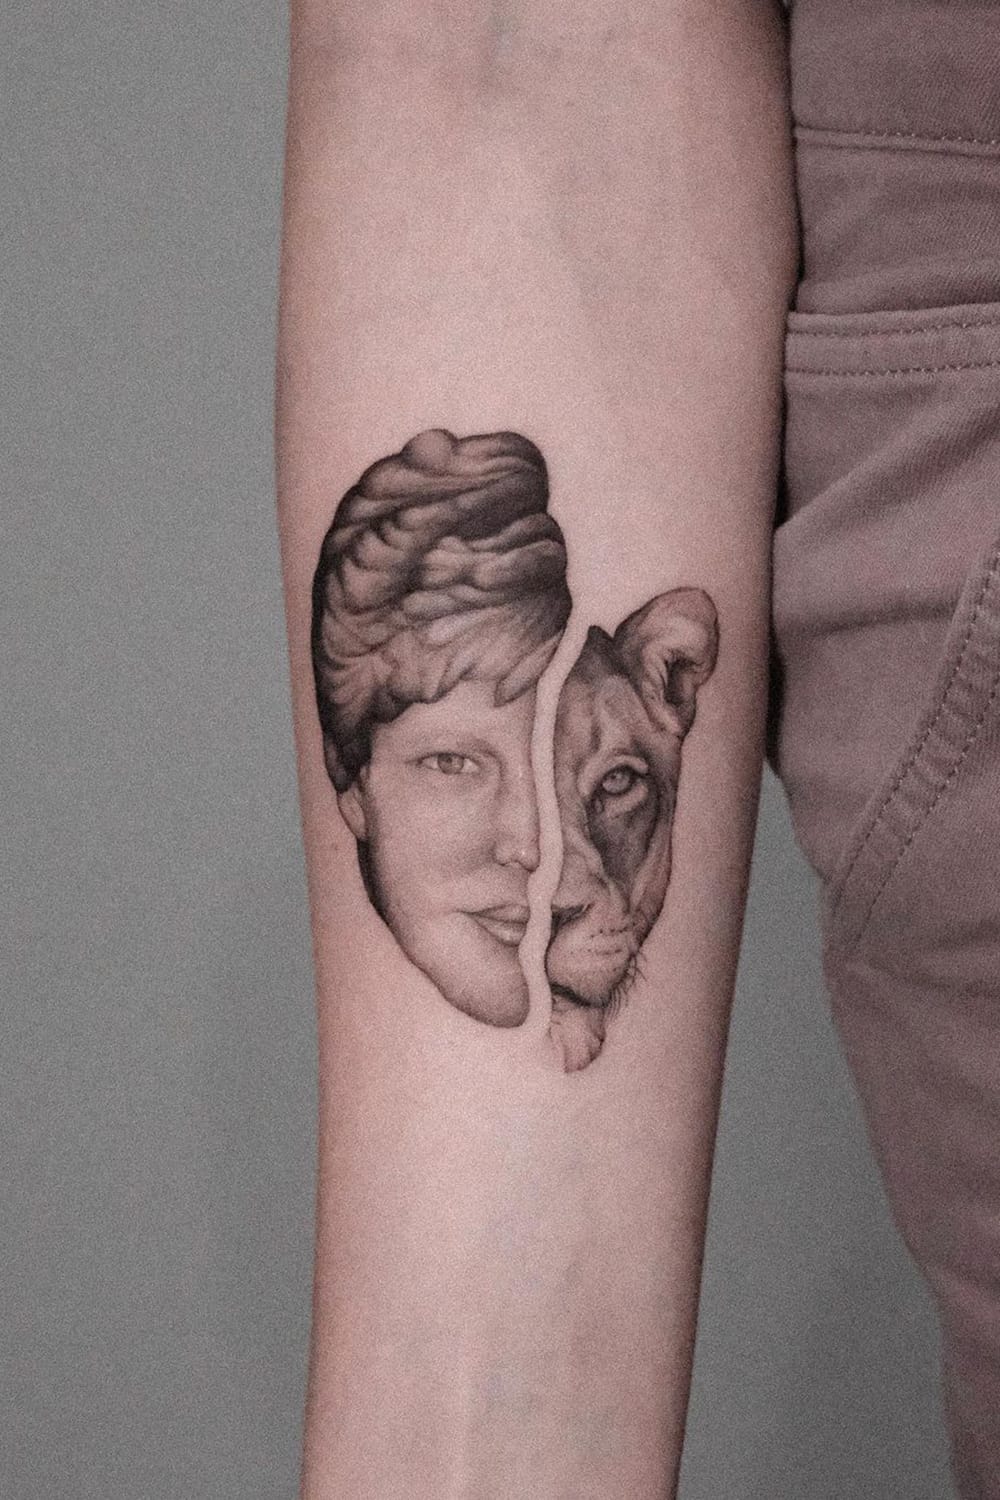 Portrait and lion tattoo